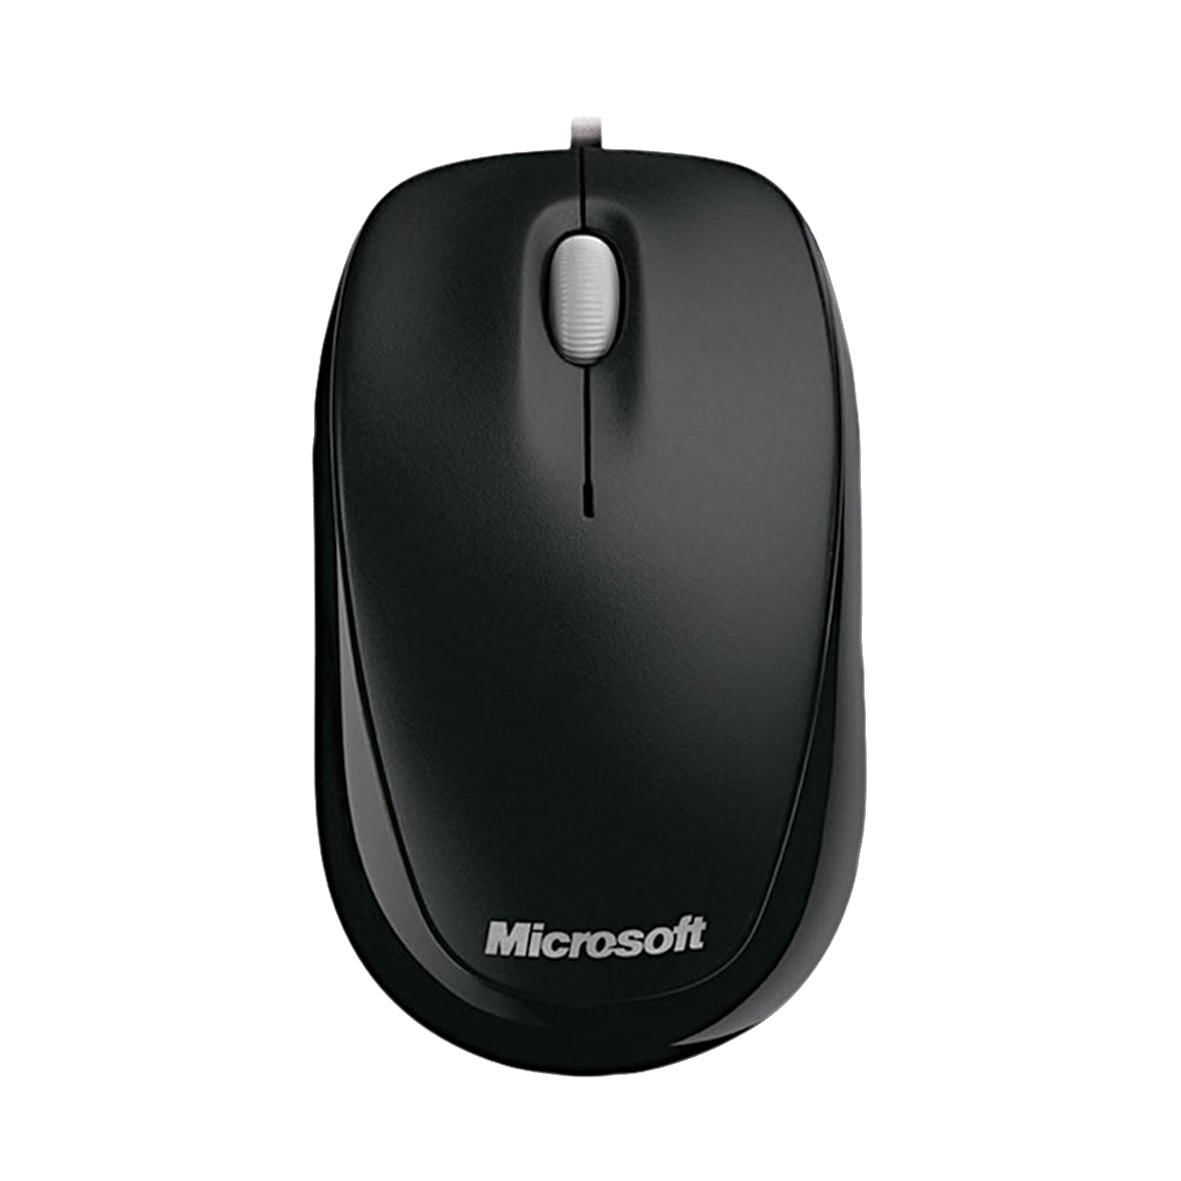 Mouse USB Microsoft Compact U810010 Preto